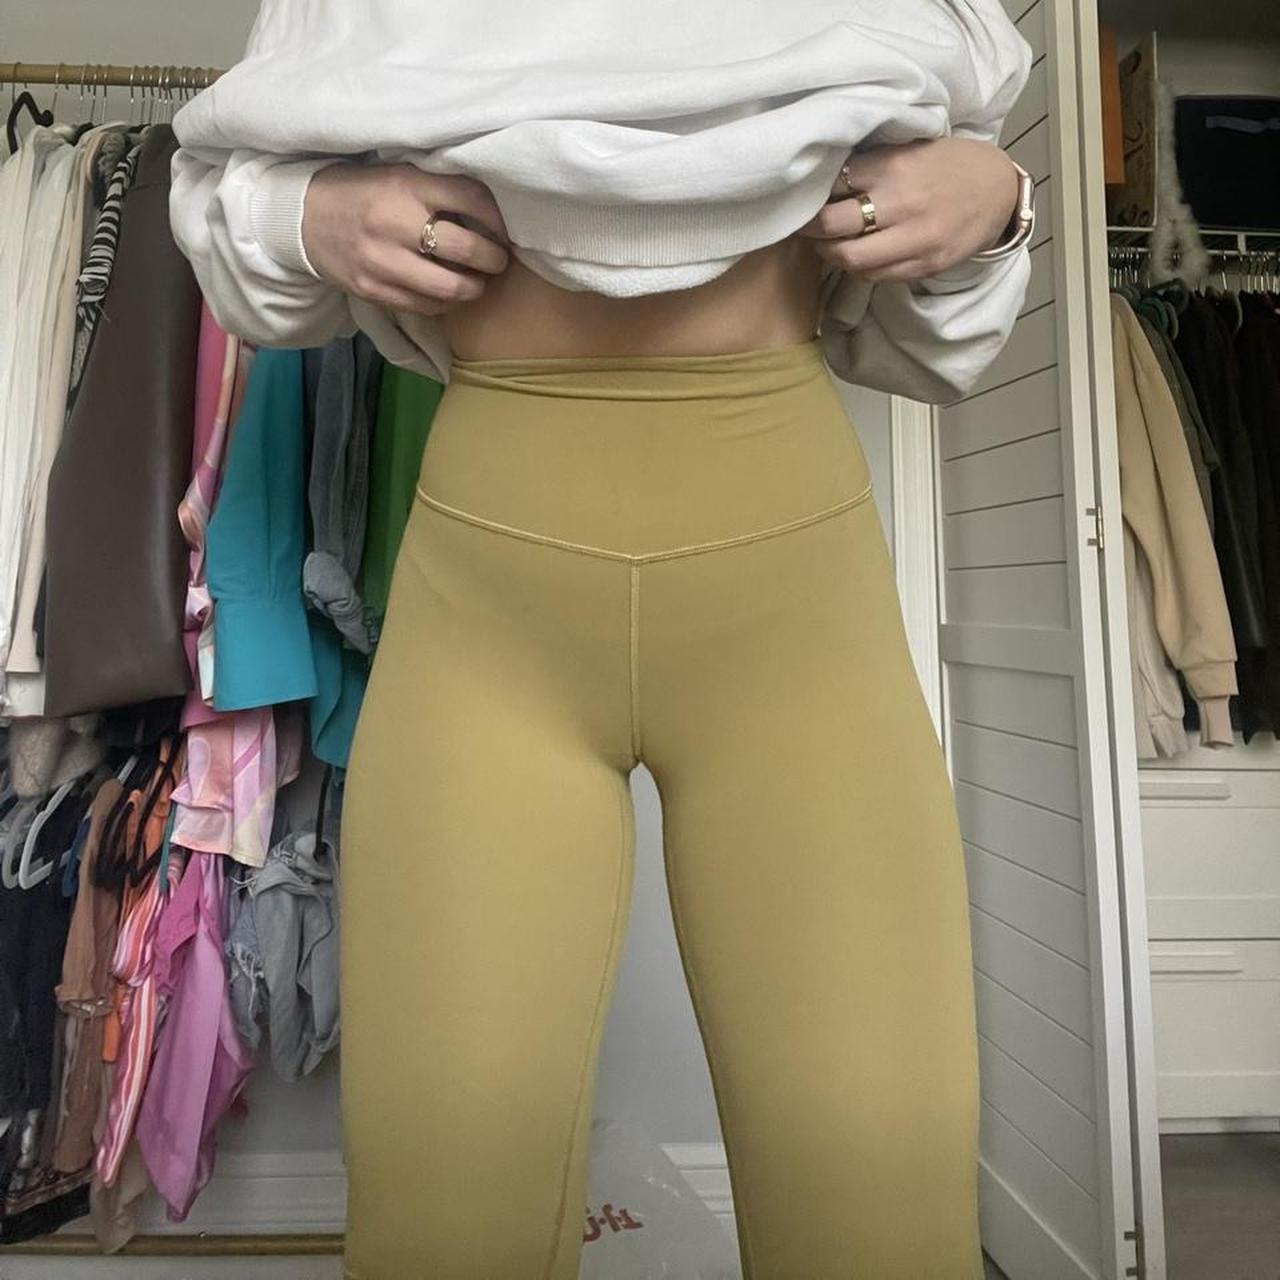 Lululemon align leggings! Size 2, great condition - Depop